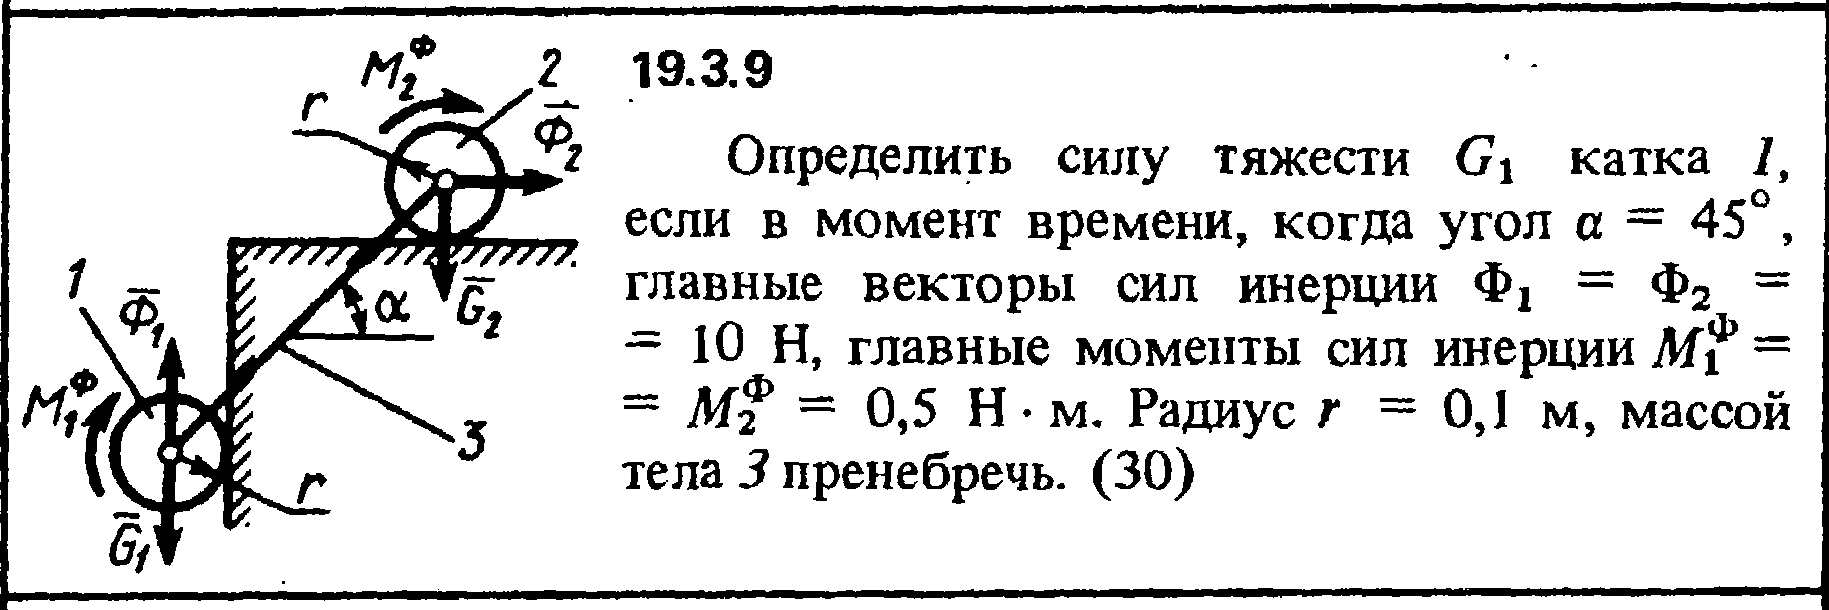 Решение 19.3.9 из сборника (решебника) Кепе О.Е. 1989